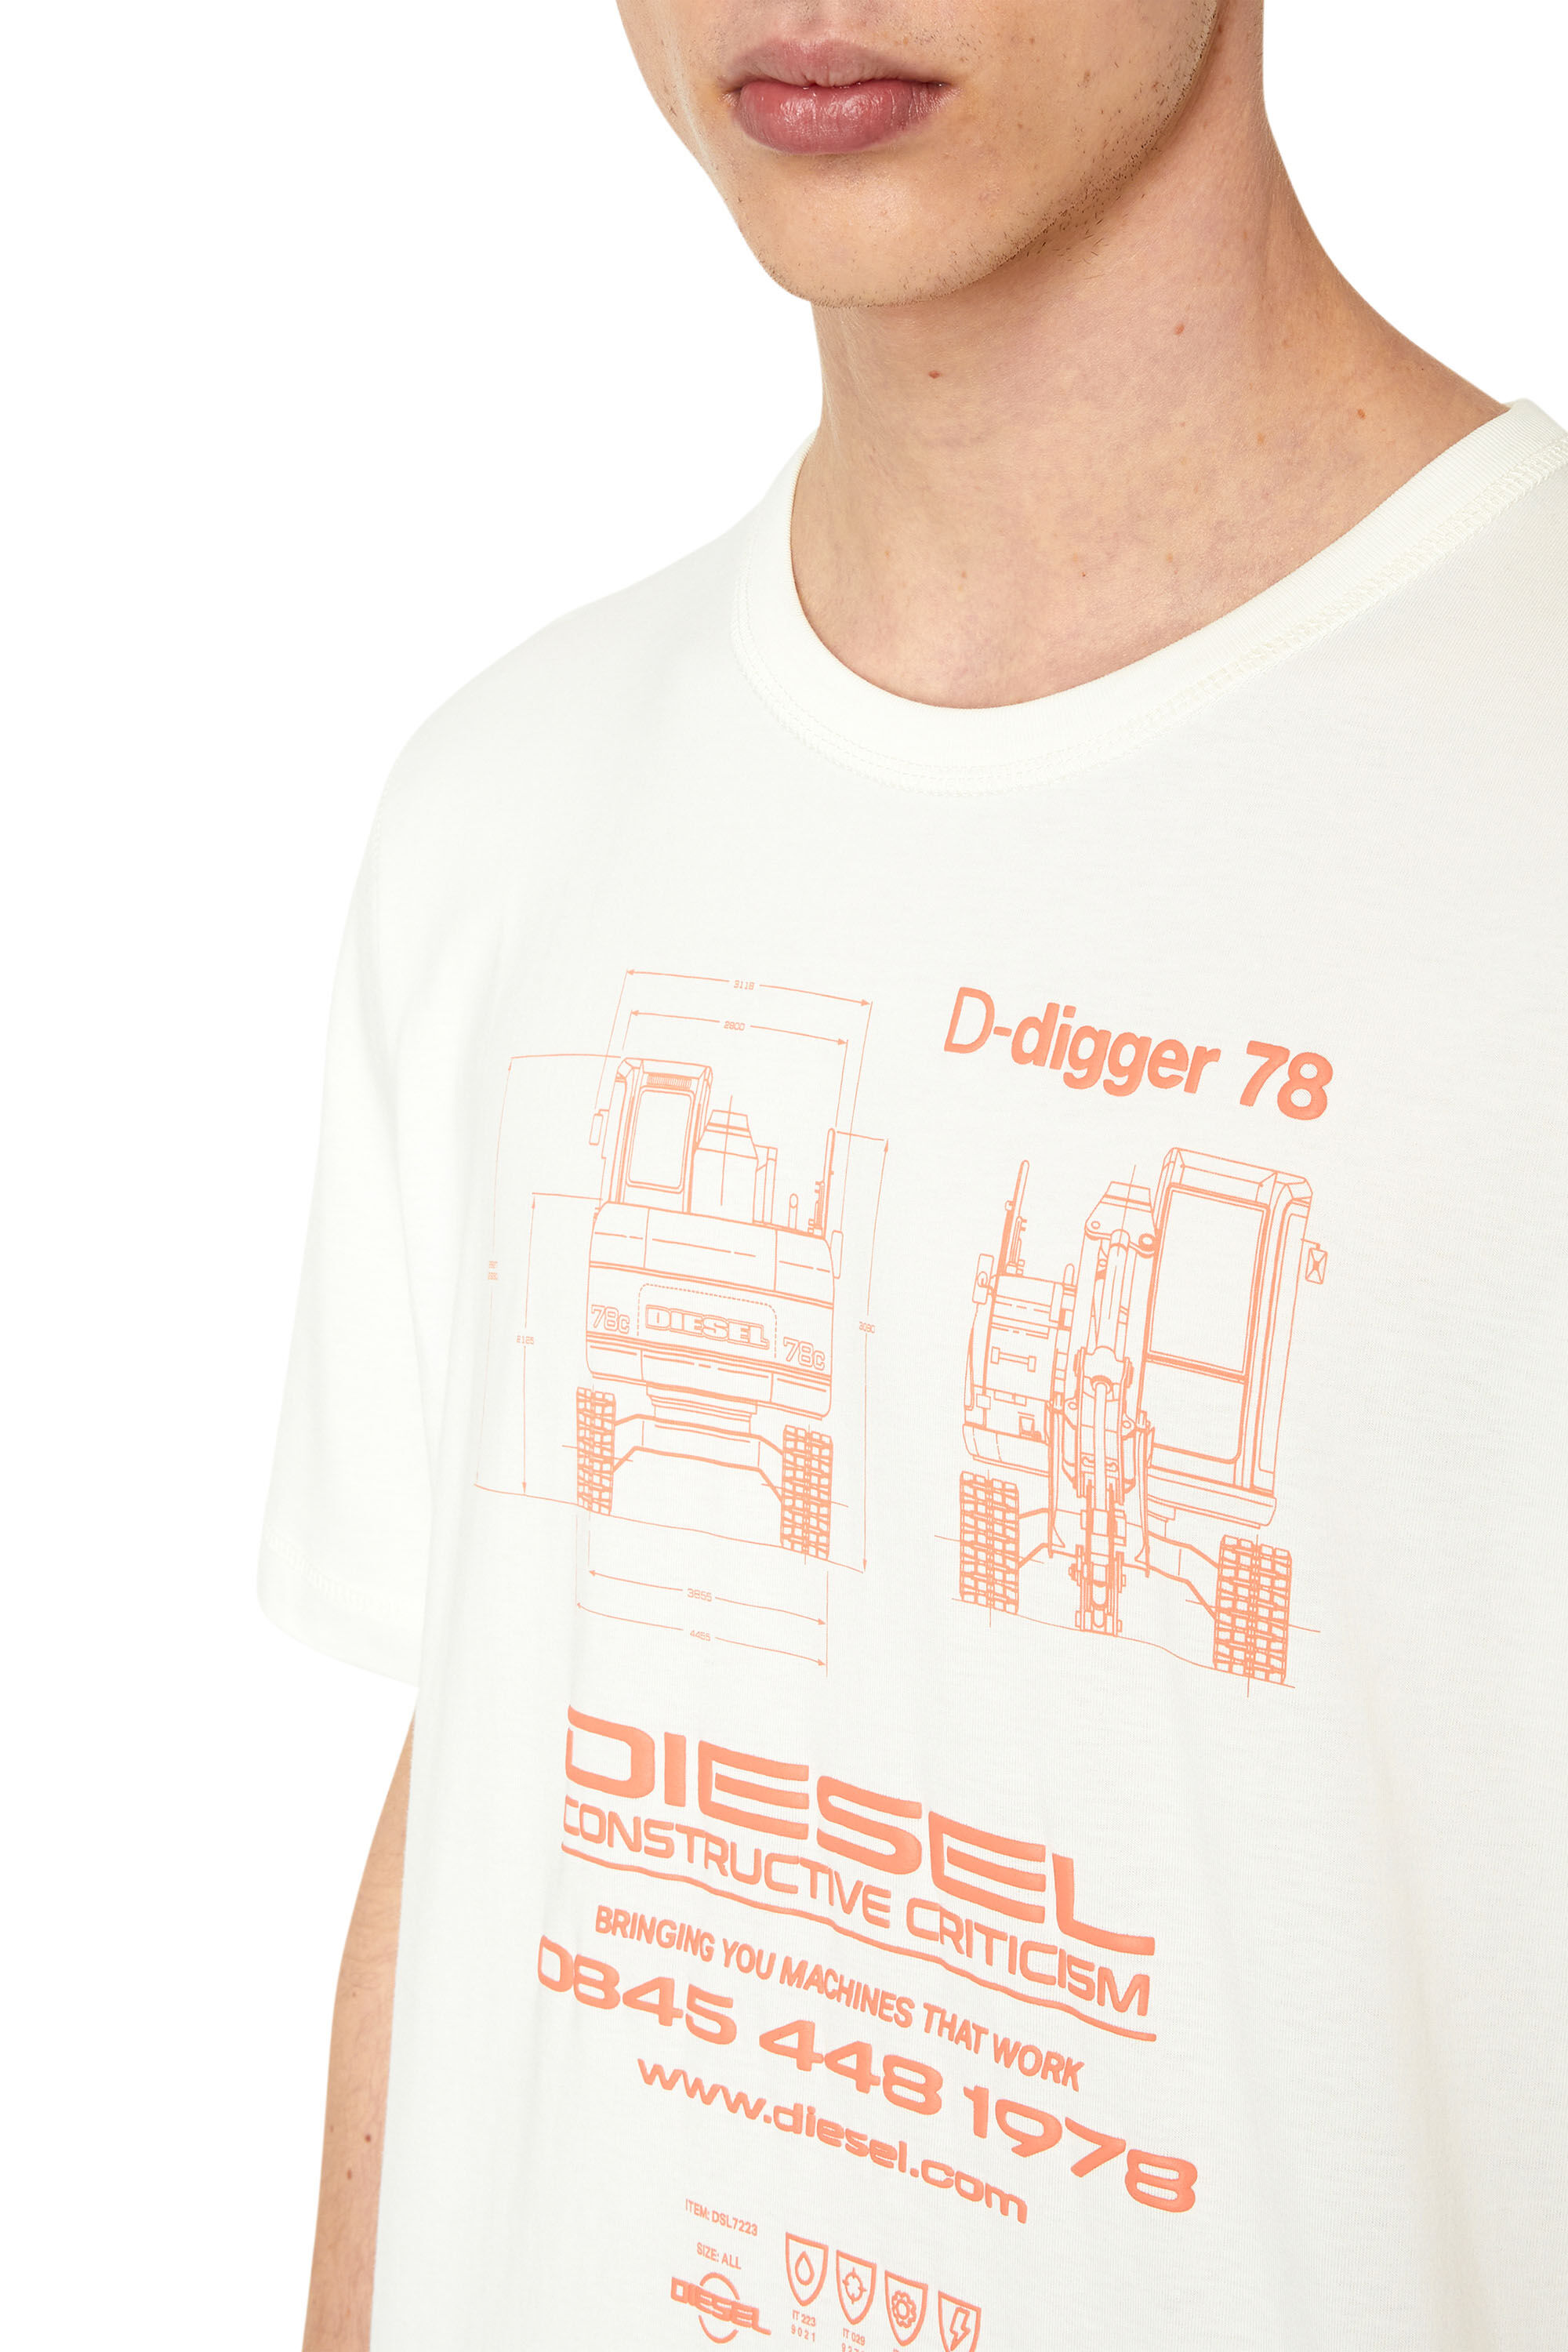 T-JUST-SLITS-G1 Man: T-shirt Constructive Criticism print | Diesel